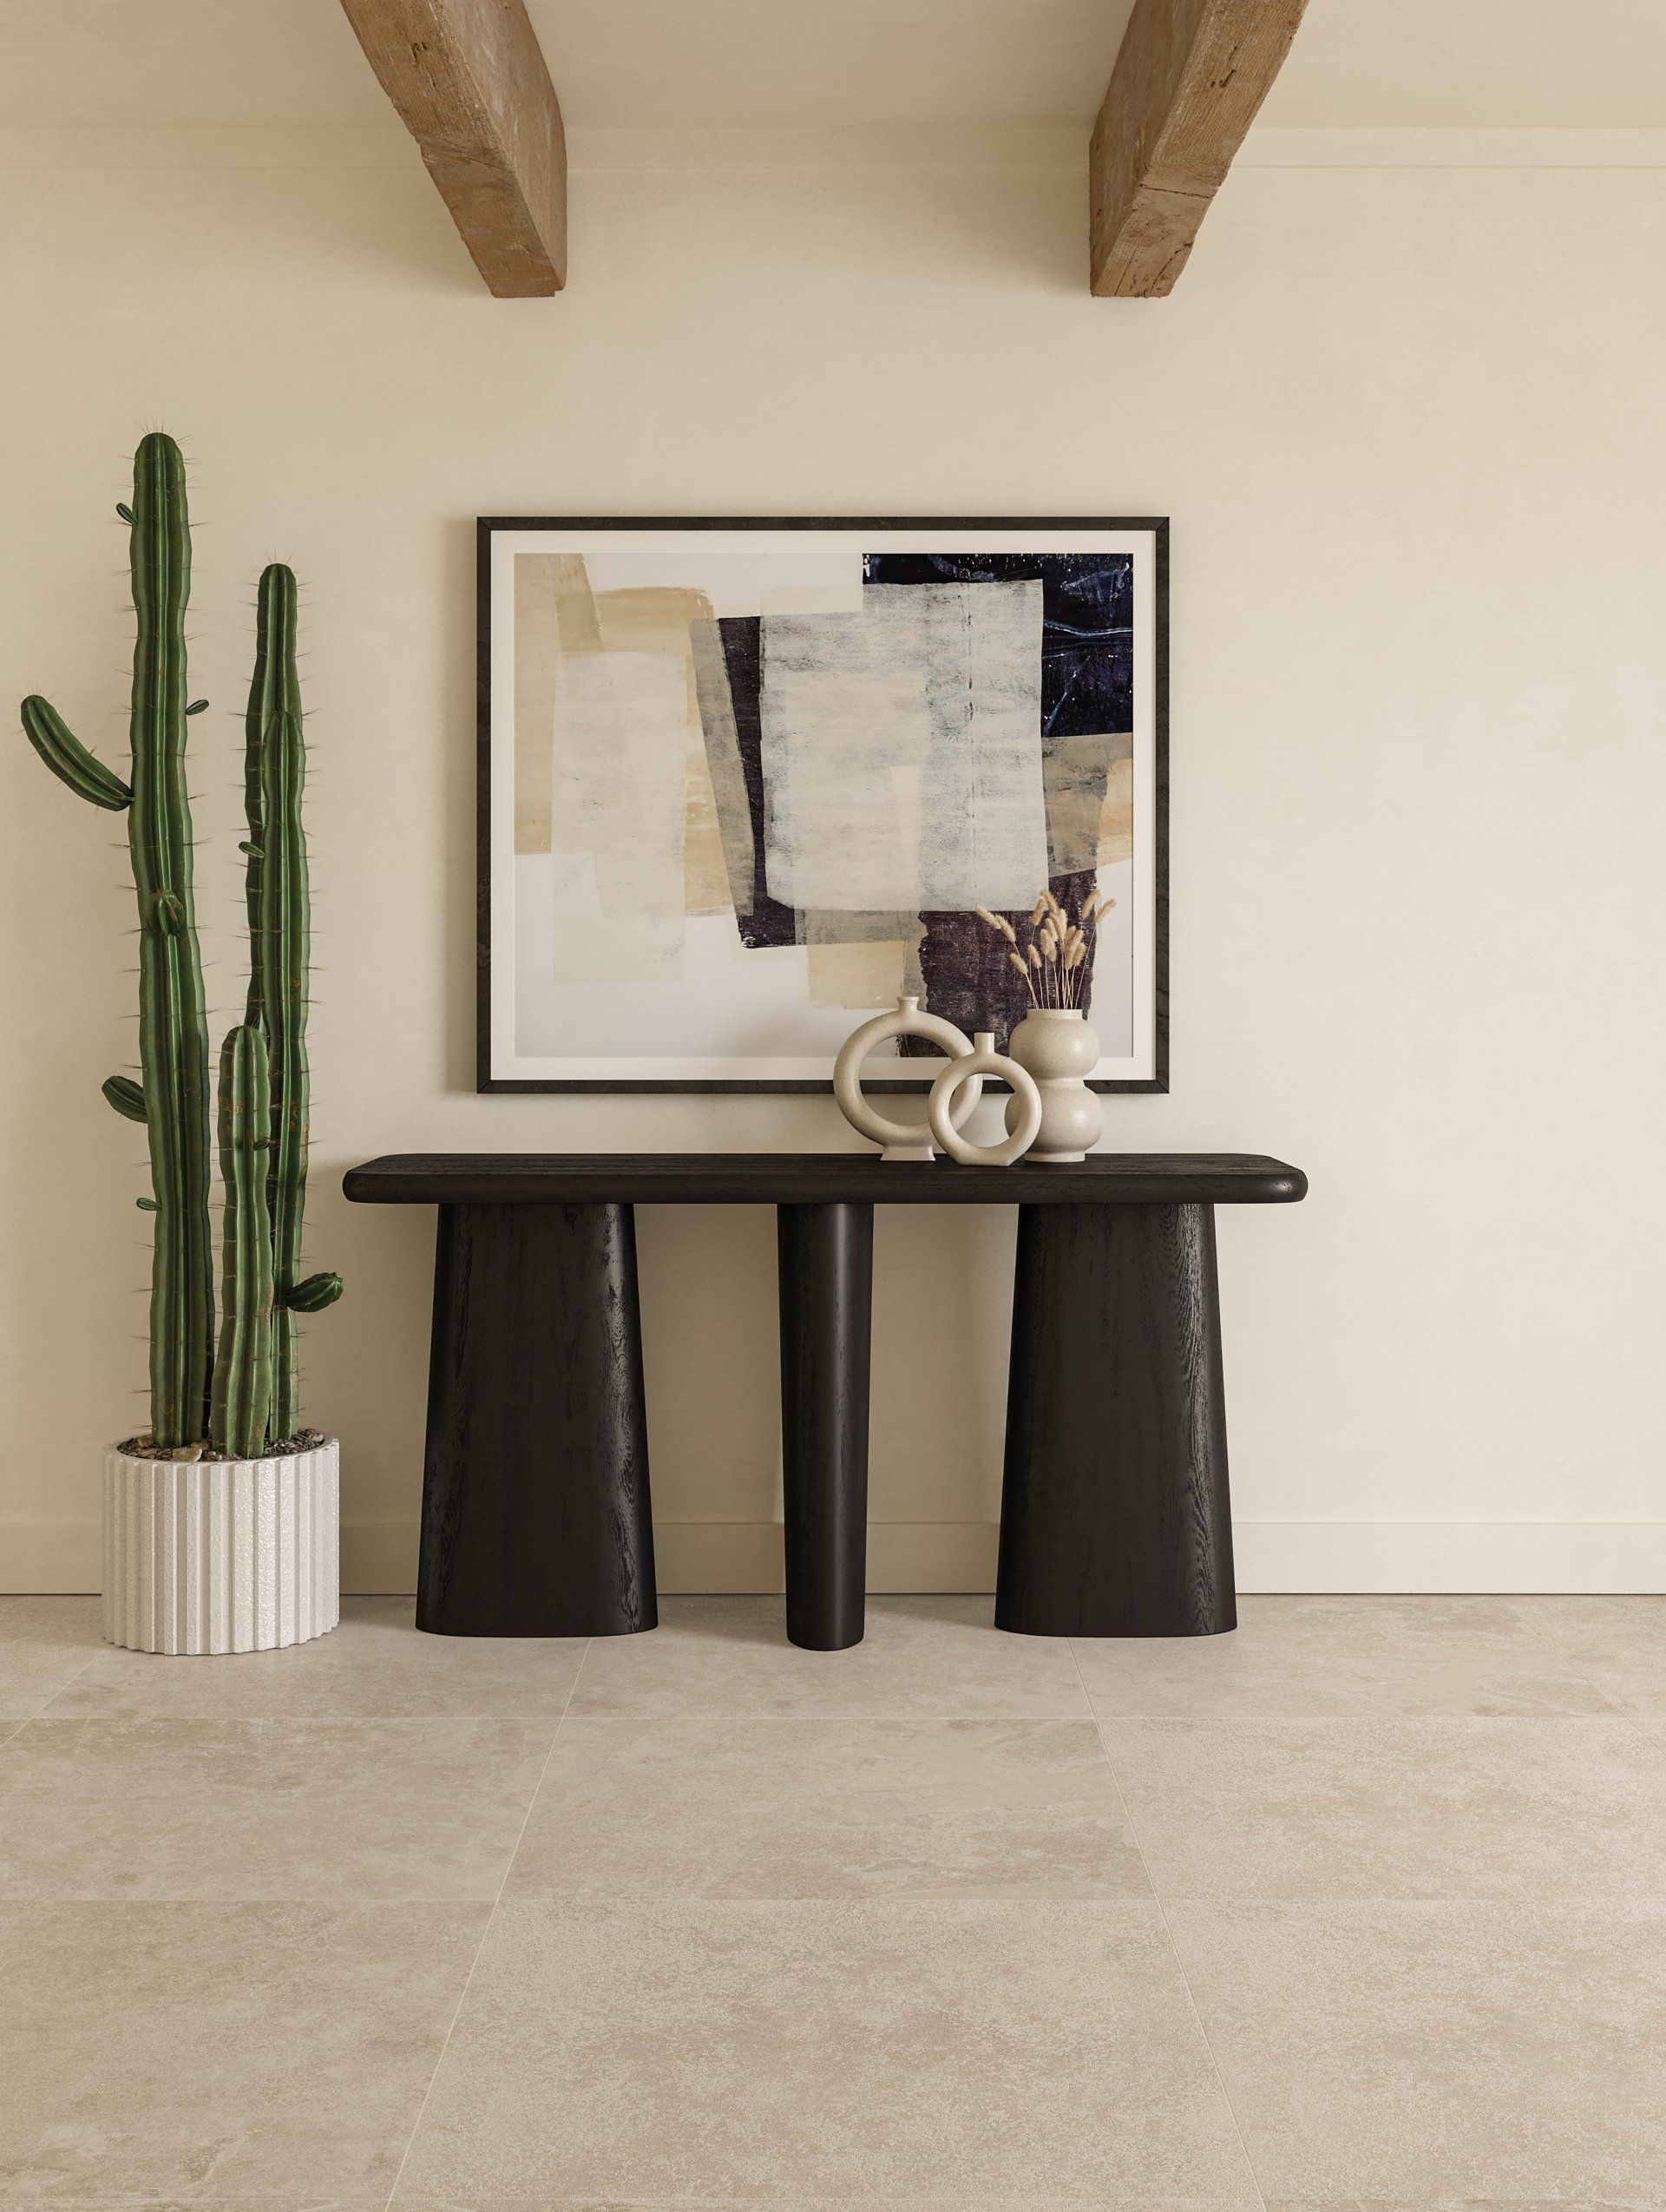 Desert themed hallway with a sofa-table, mirror, and cactus on a tile floor